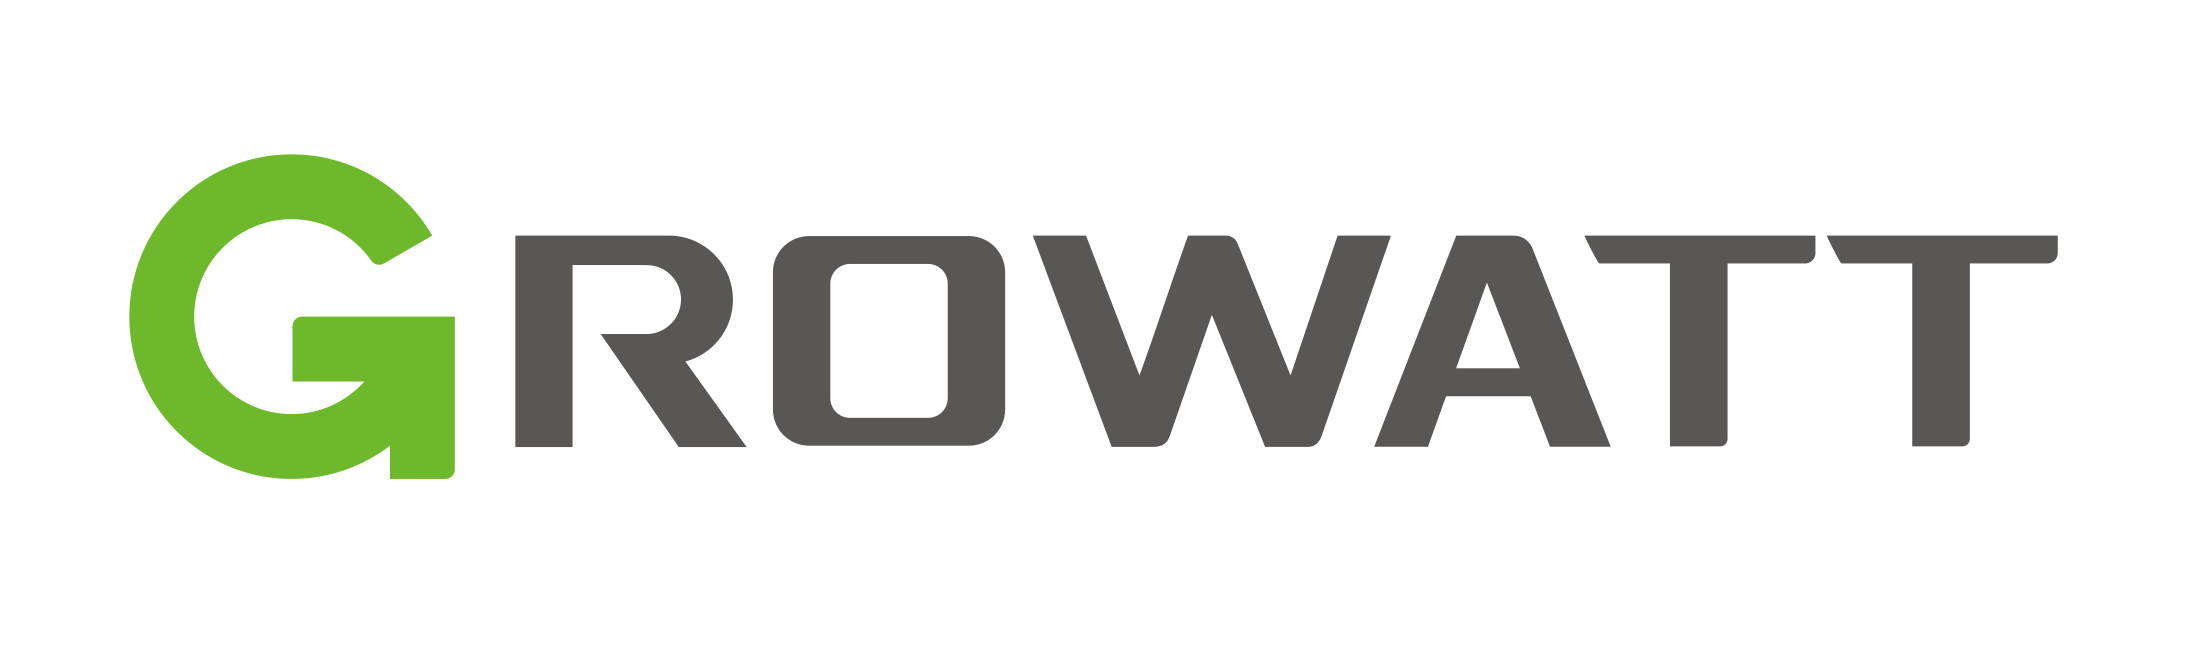 Growatt_logo.png